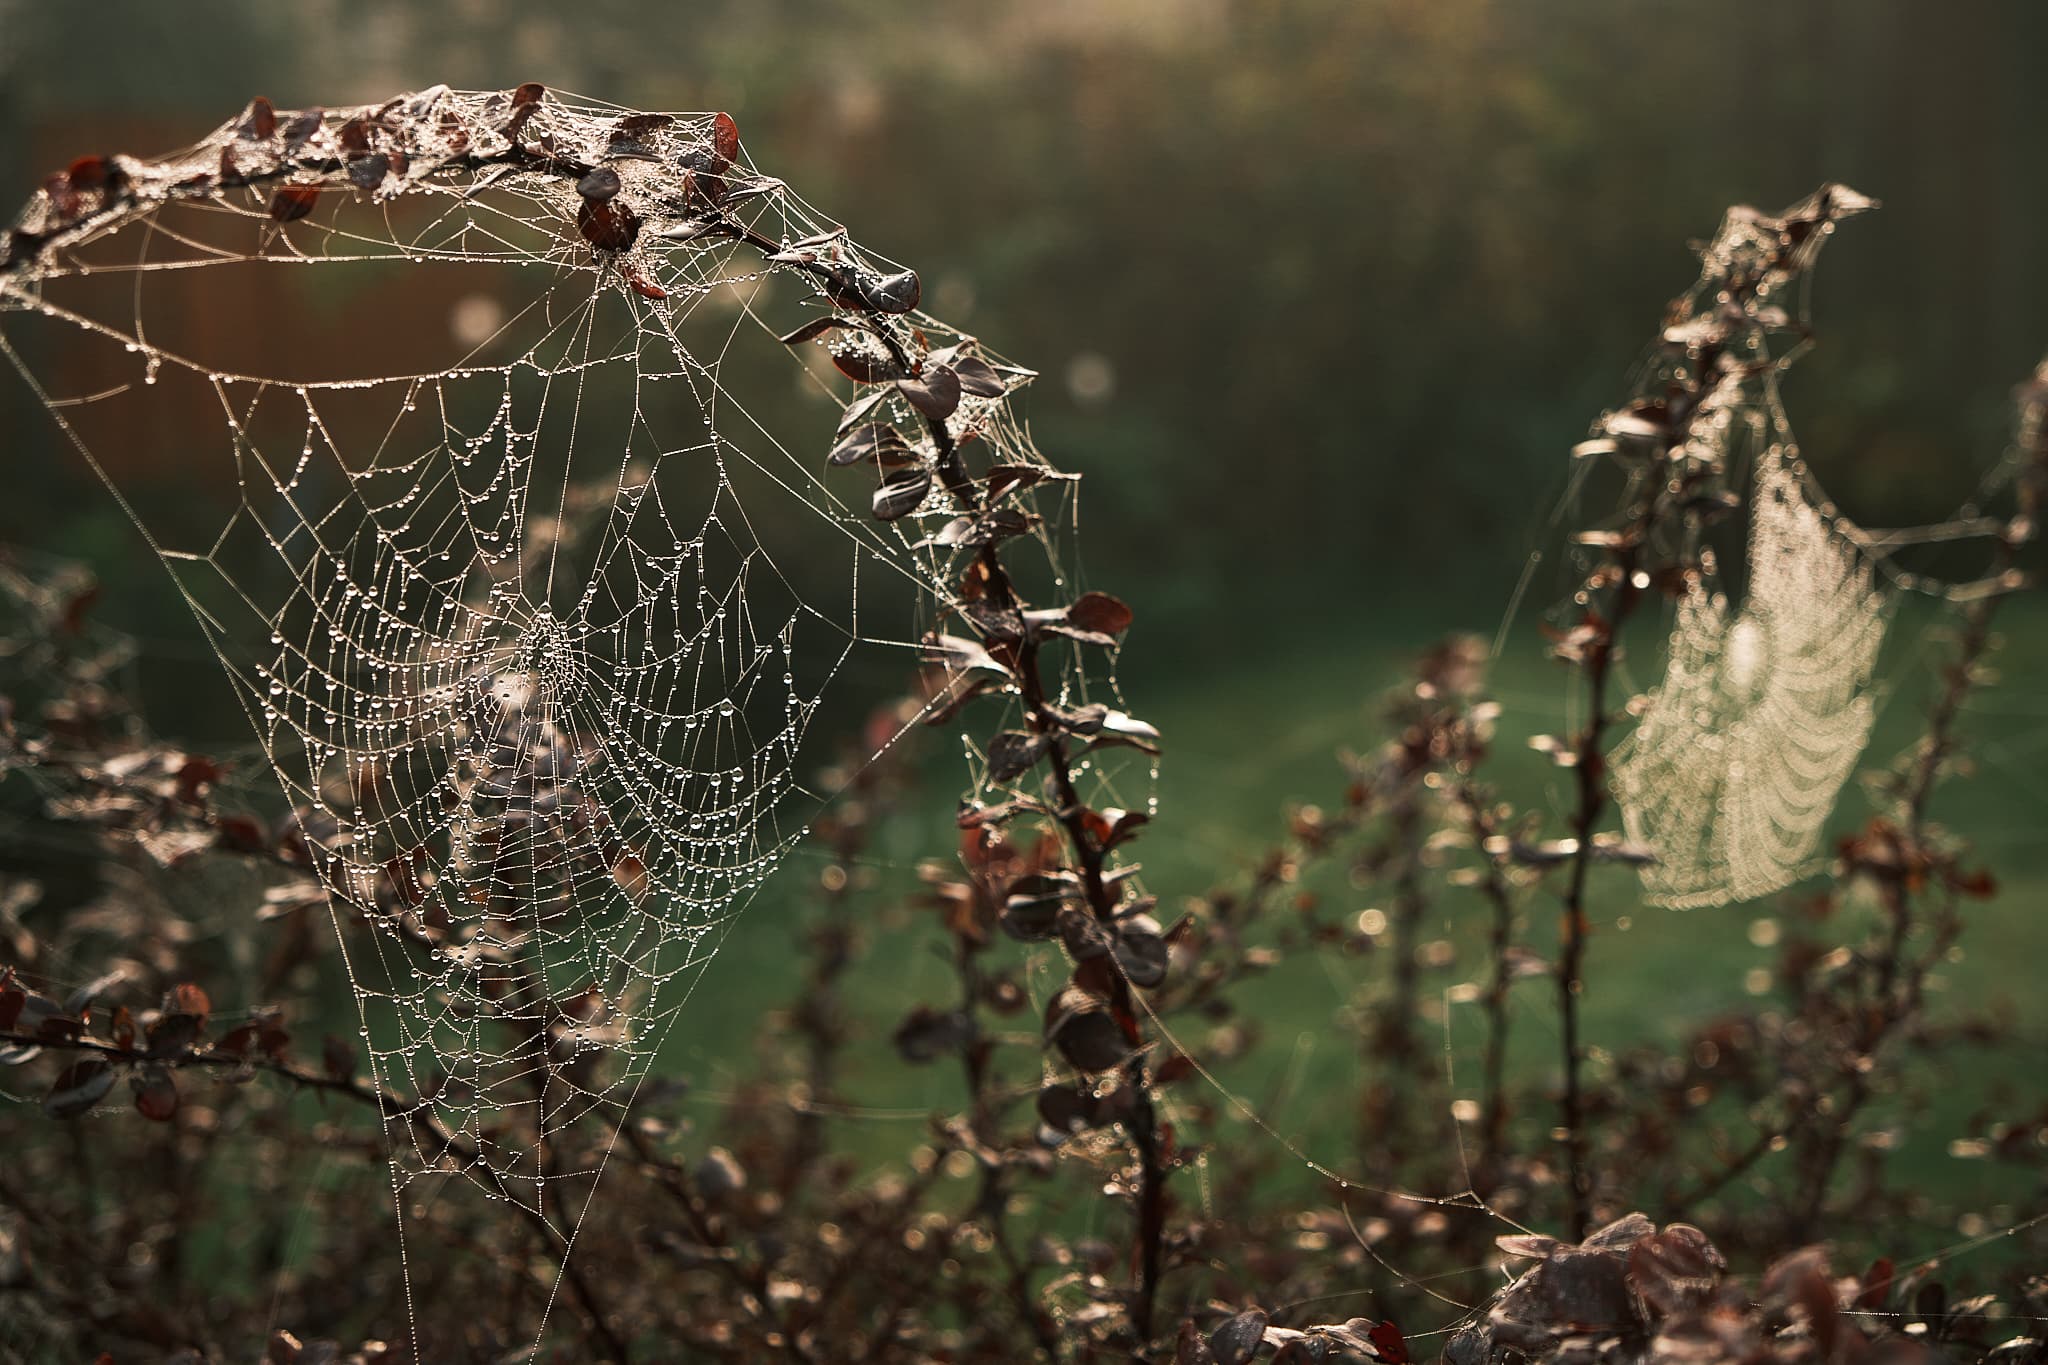 dewdrops on a spiderweb